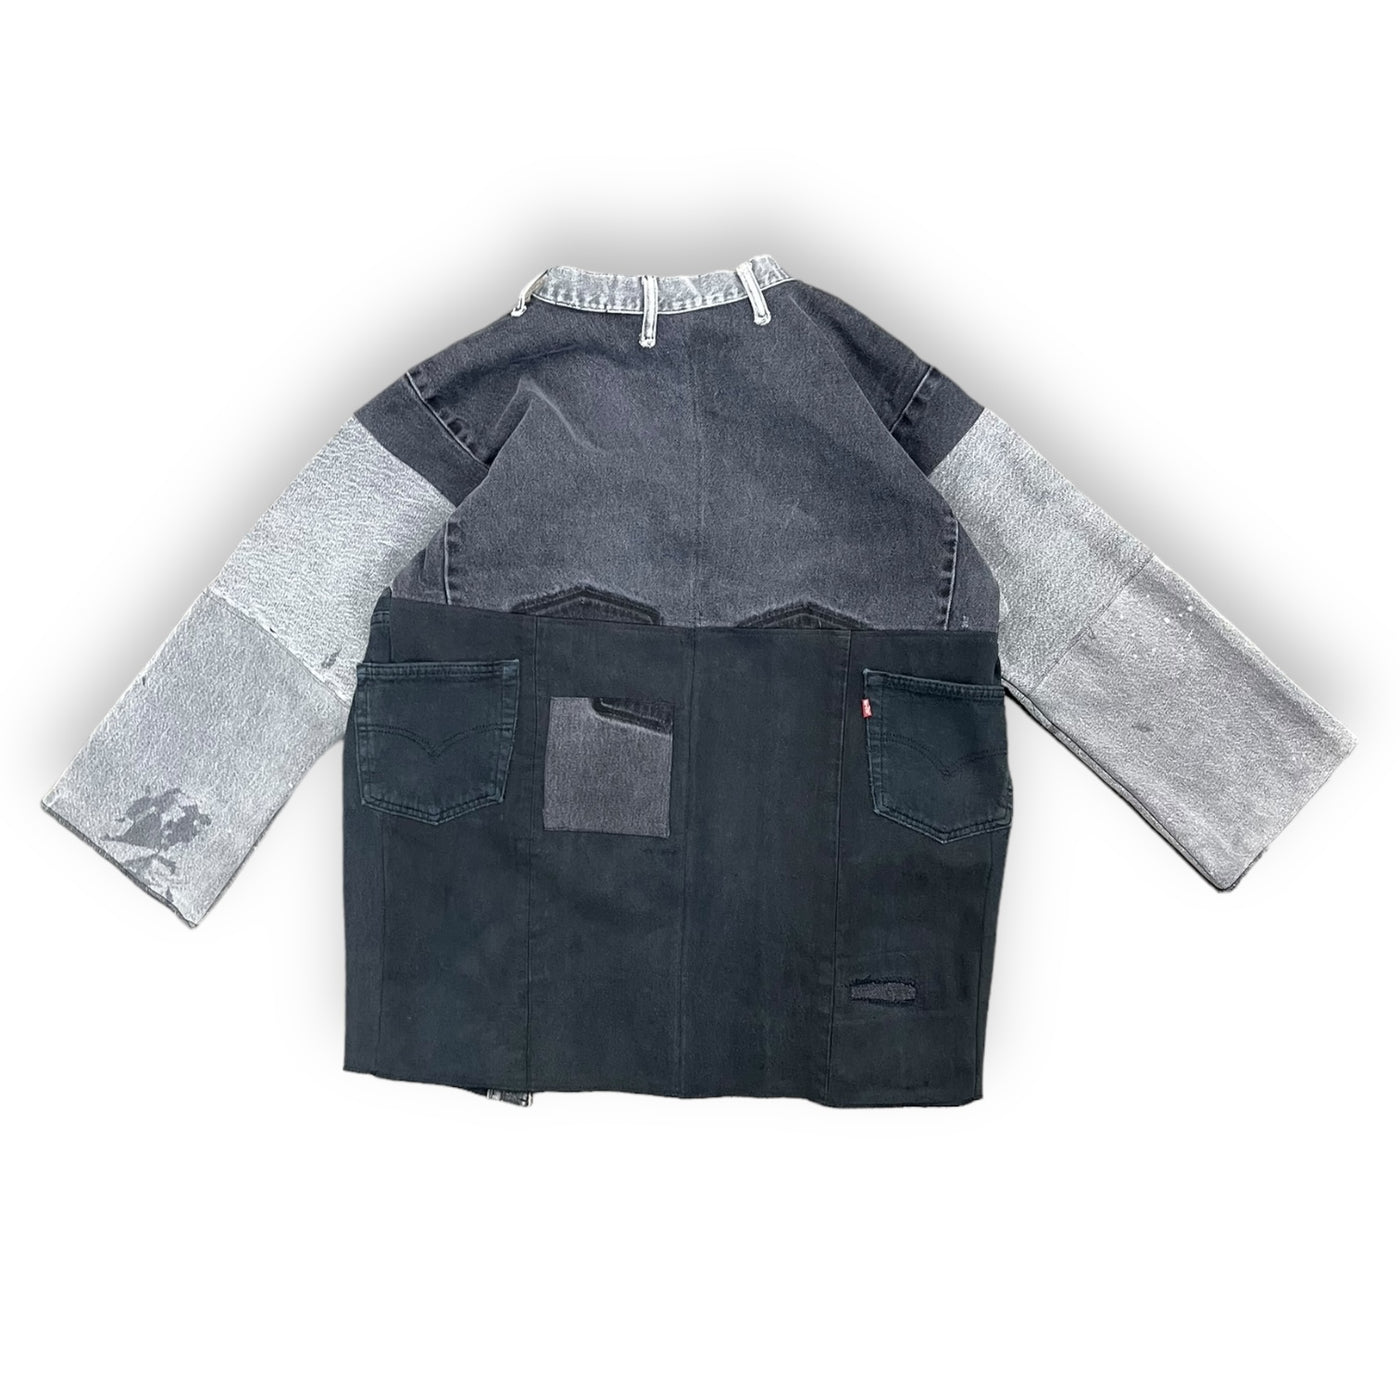 Easy Jacket 11.7 - Black Grey Petite